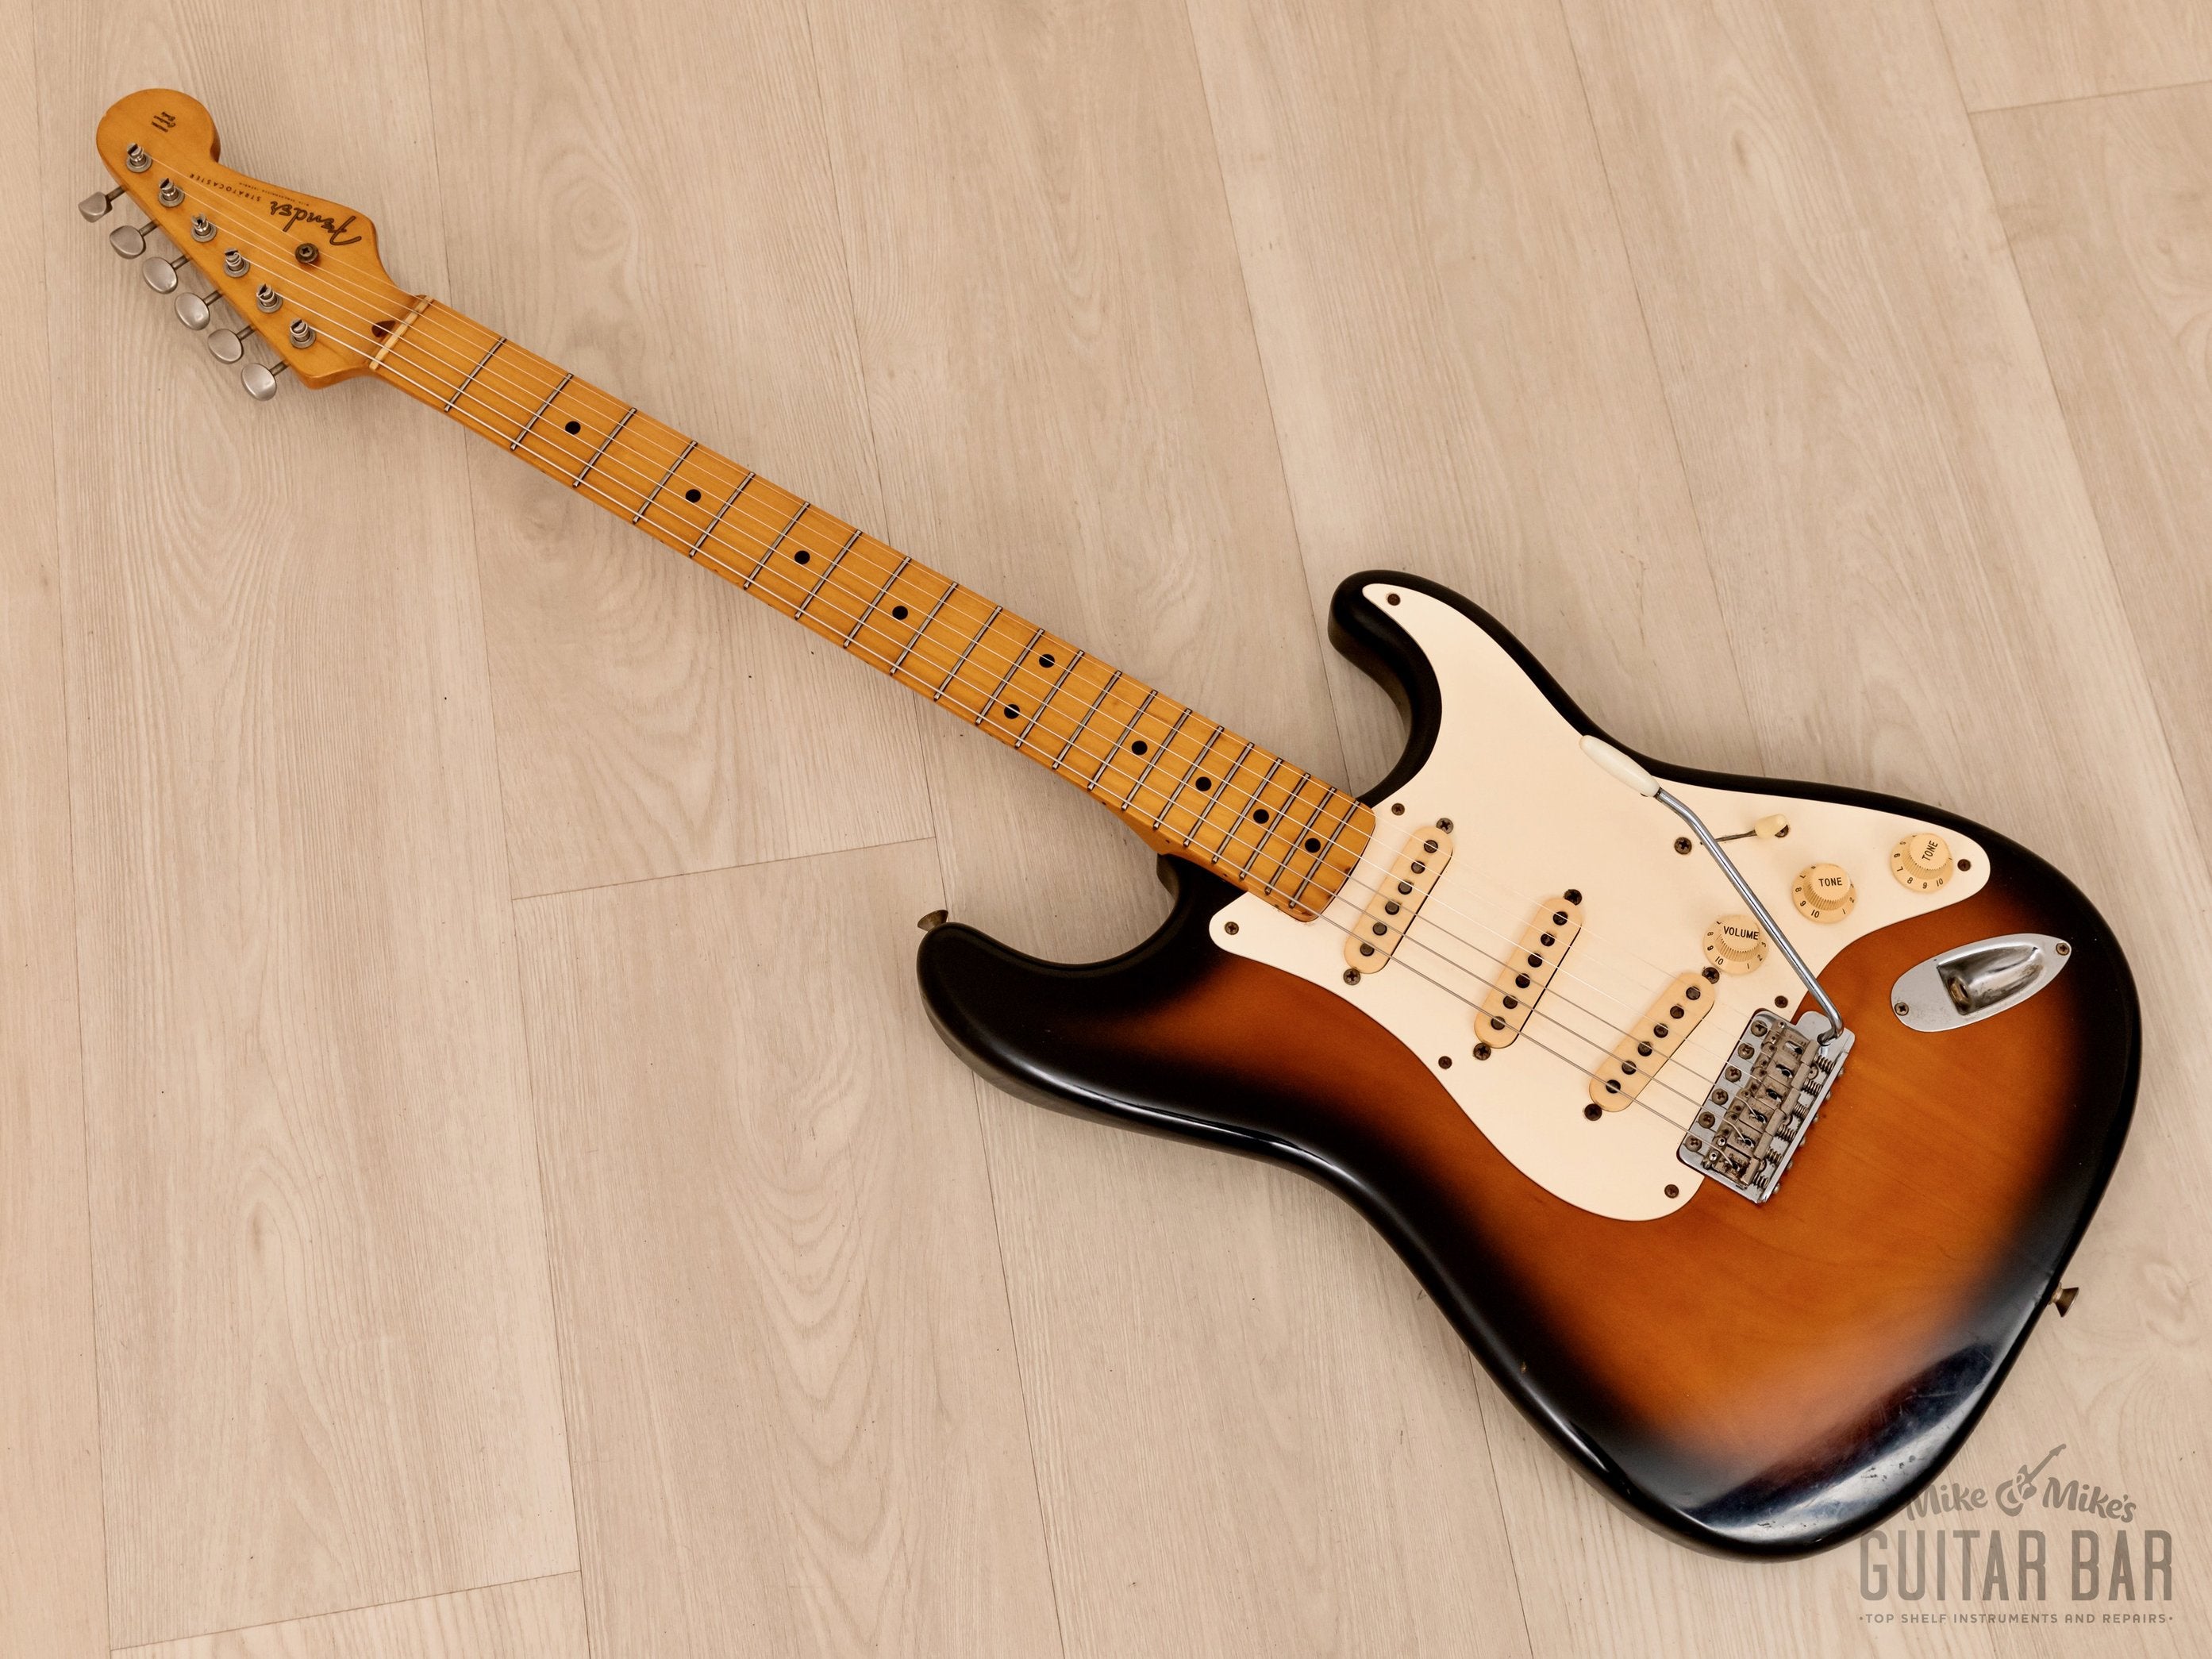 1989 Fender '54 Stratocaster ST54-900 Sunburst Lacquer w/ American Vintage Pickups, Japan MIJ Fujigen ST54-115